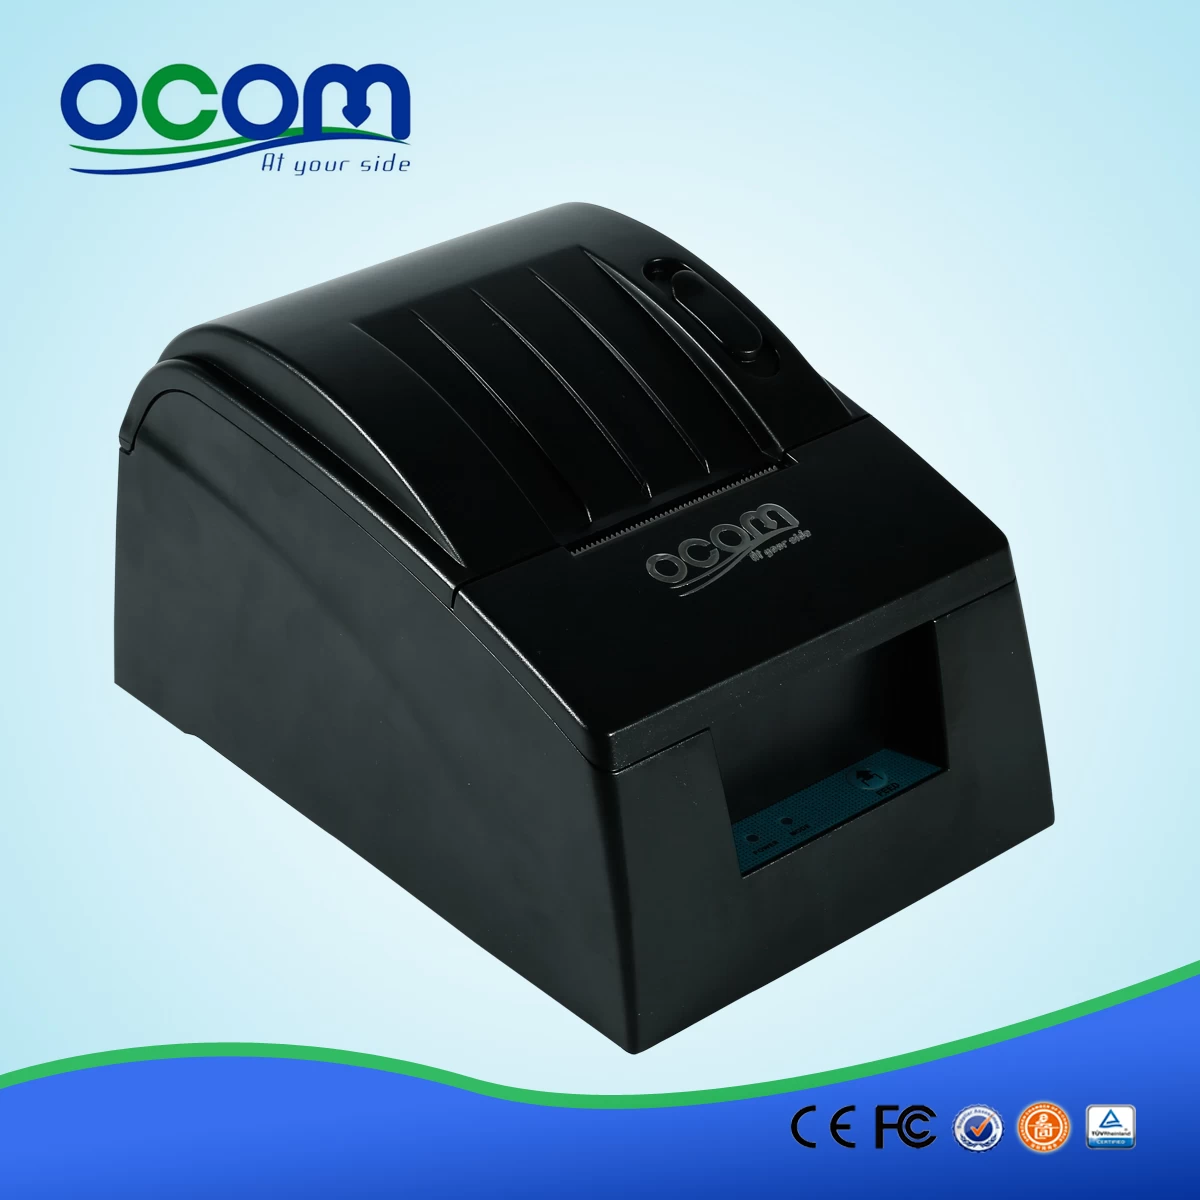 58mm Pos Thermal Receipt Printer ( OCPP-585)